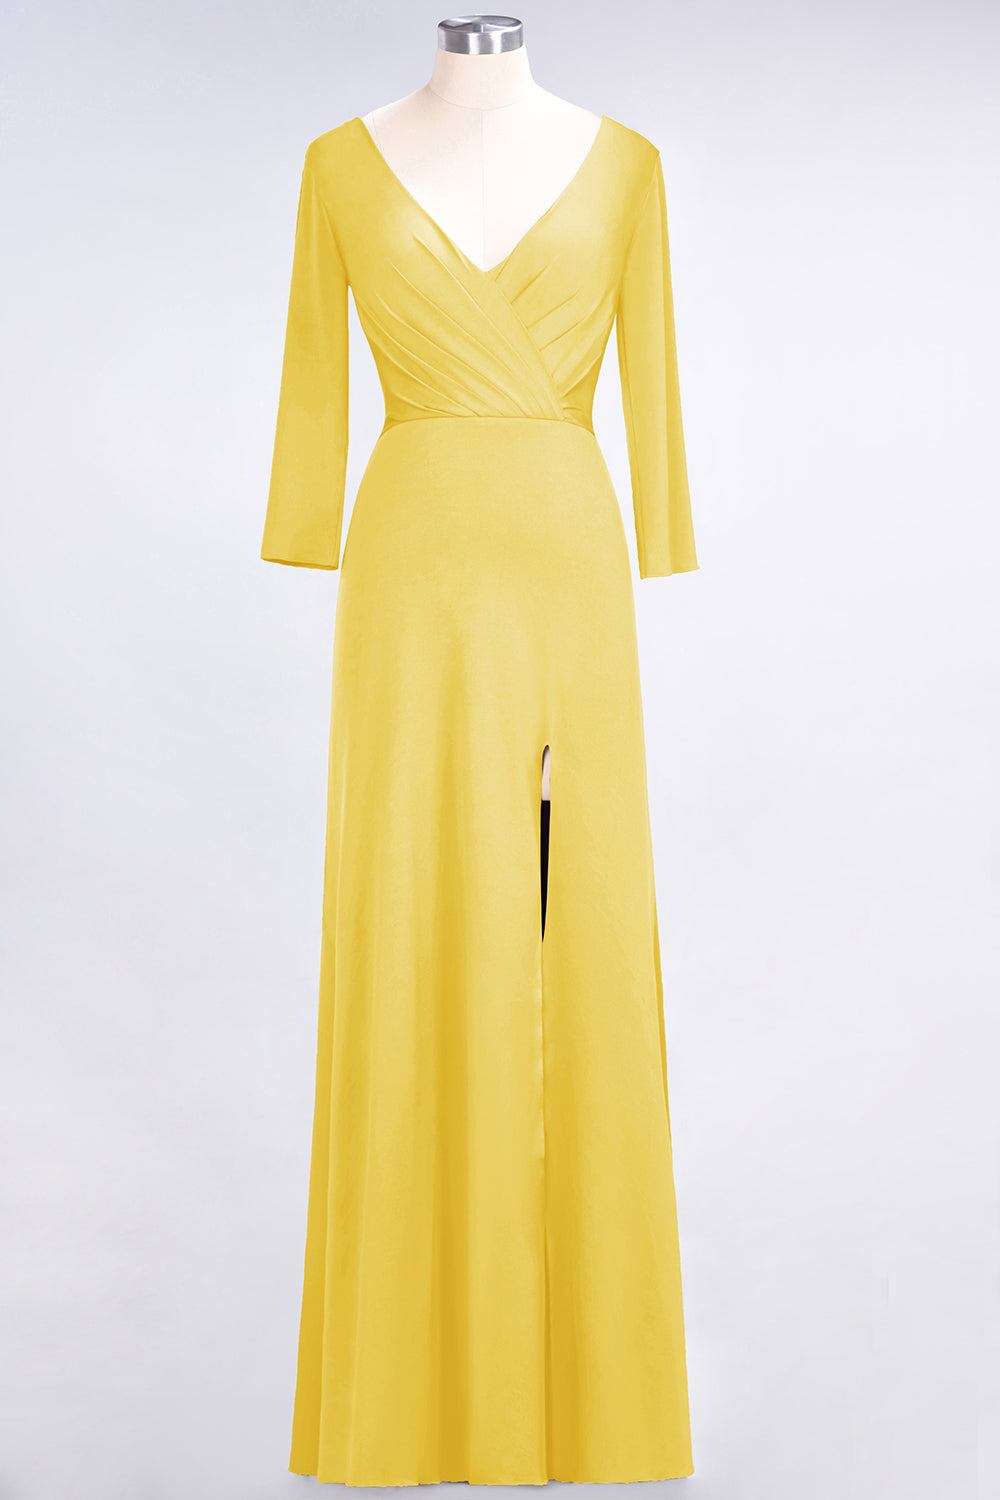 Popular Spandex Long-Sleeves Burgundy Bridesmaid Dresses with Side-Slit-27dress